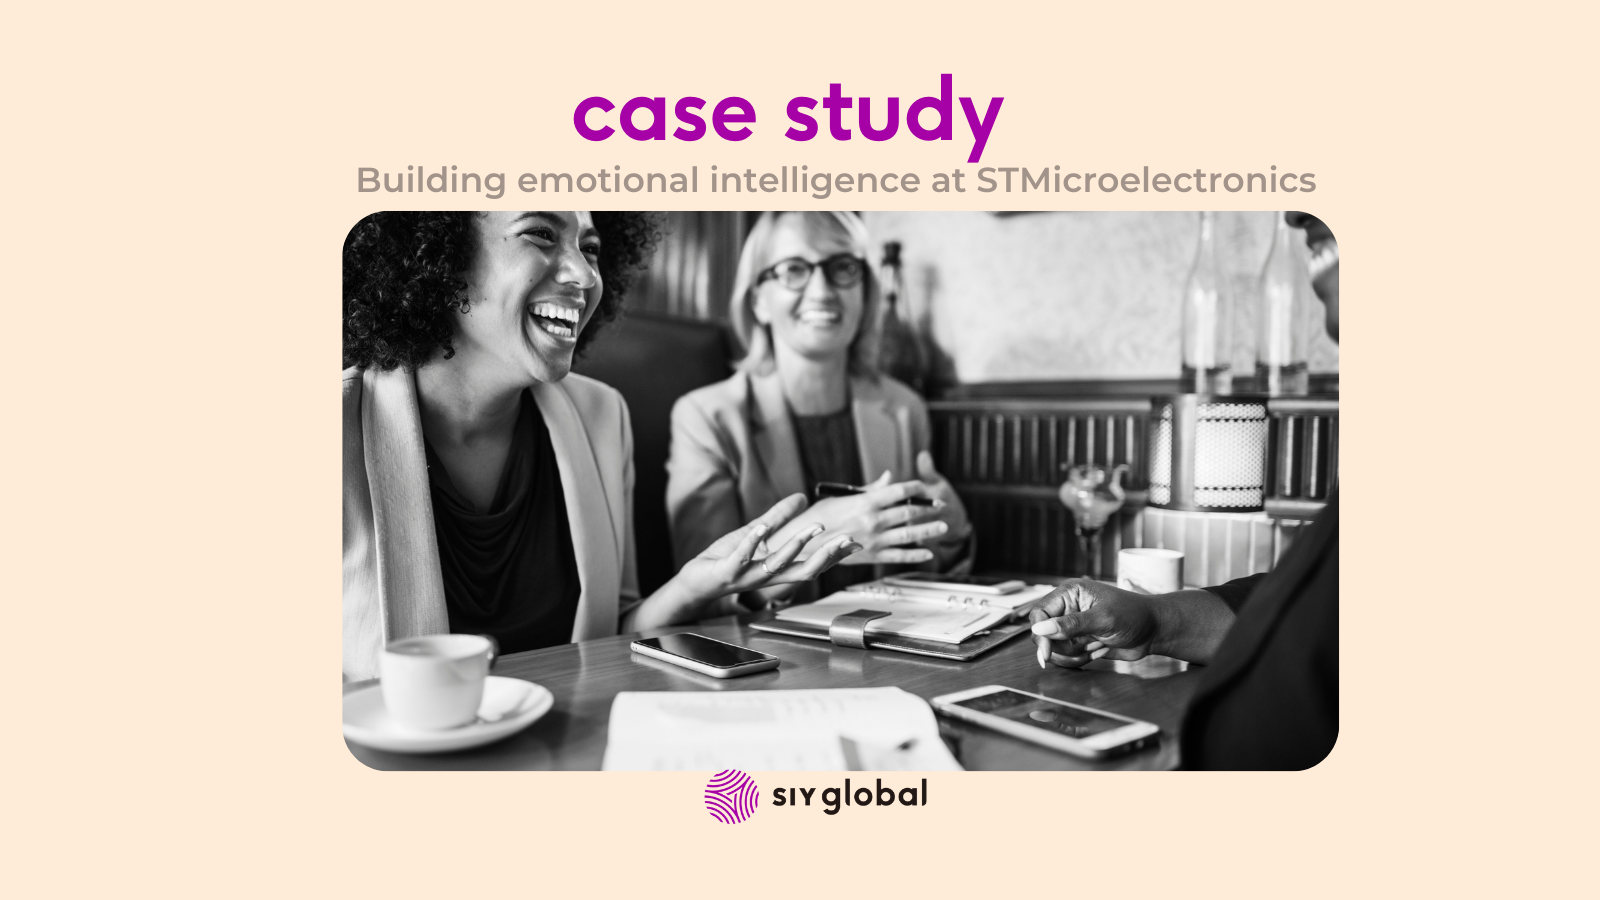 Case Study: STMicroelectronics Develops Emotional Intelligence Capabilities